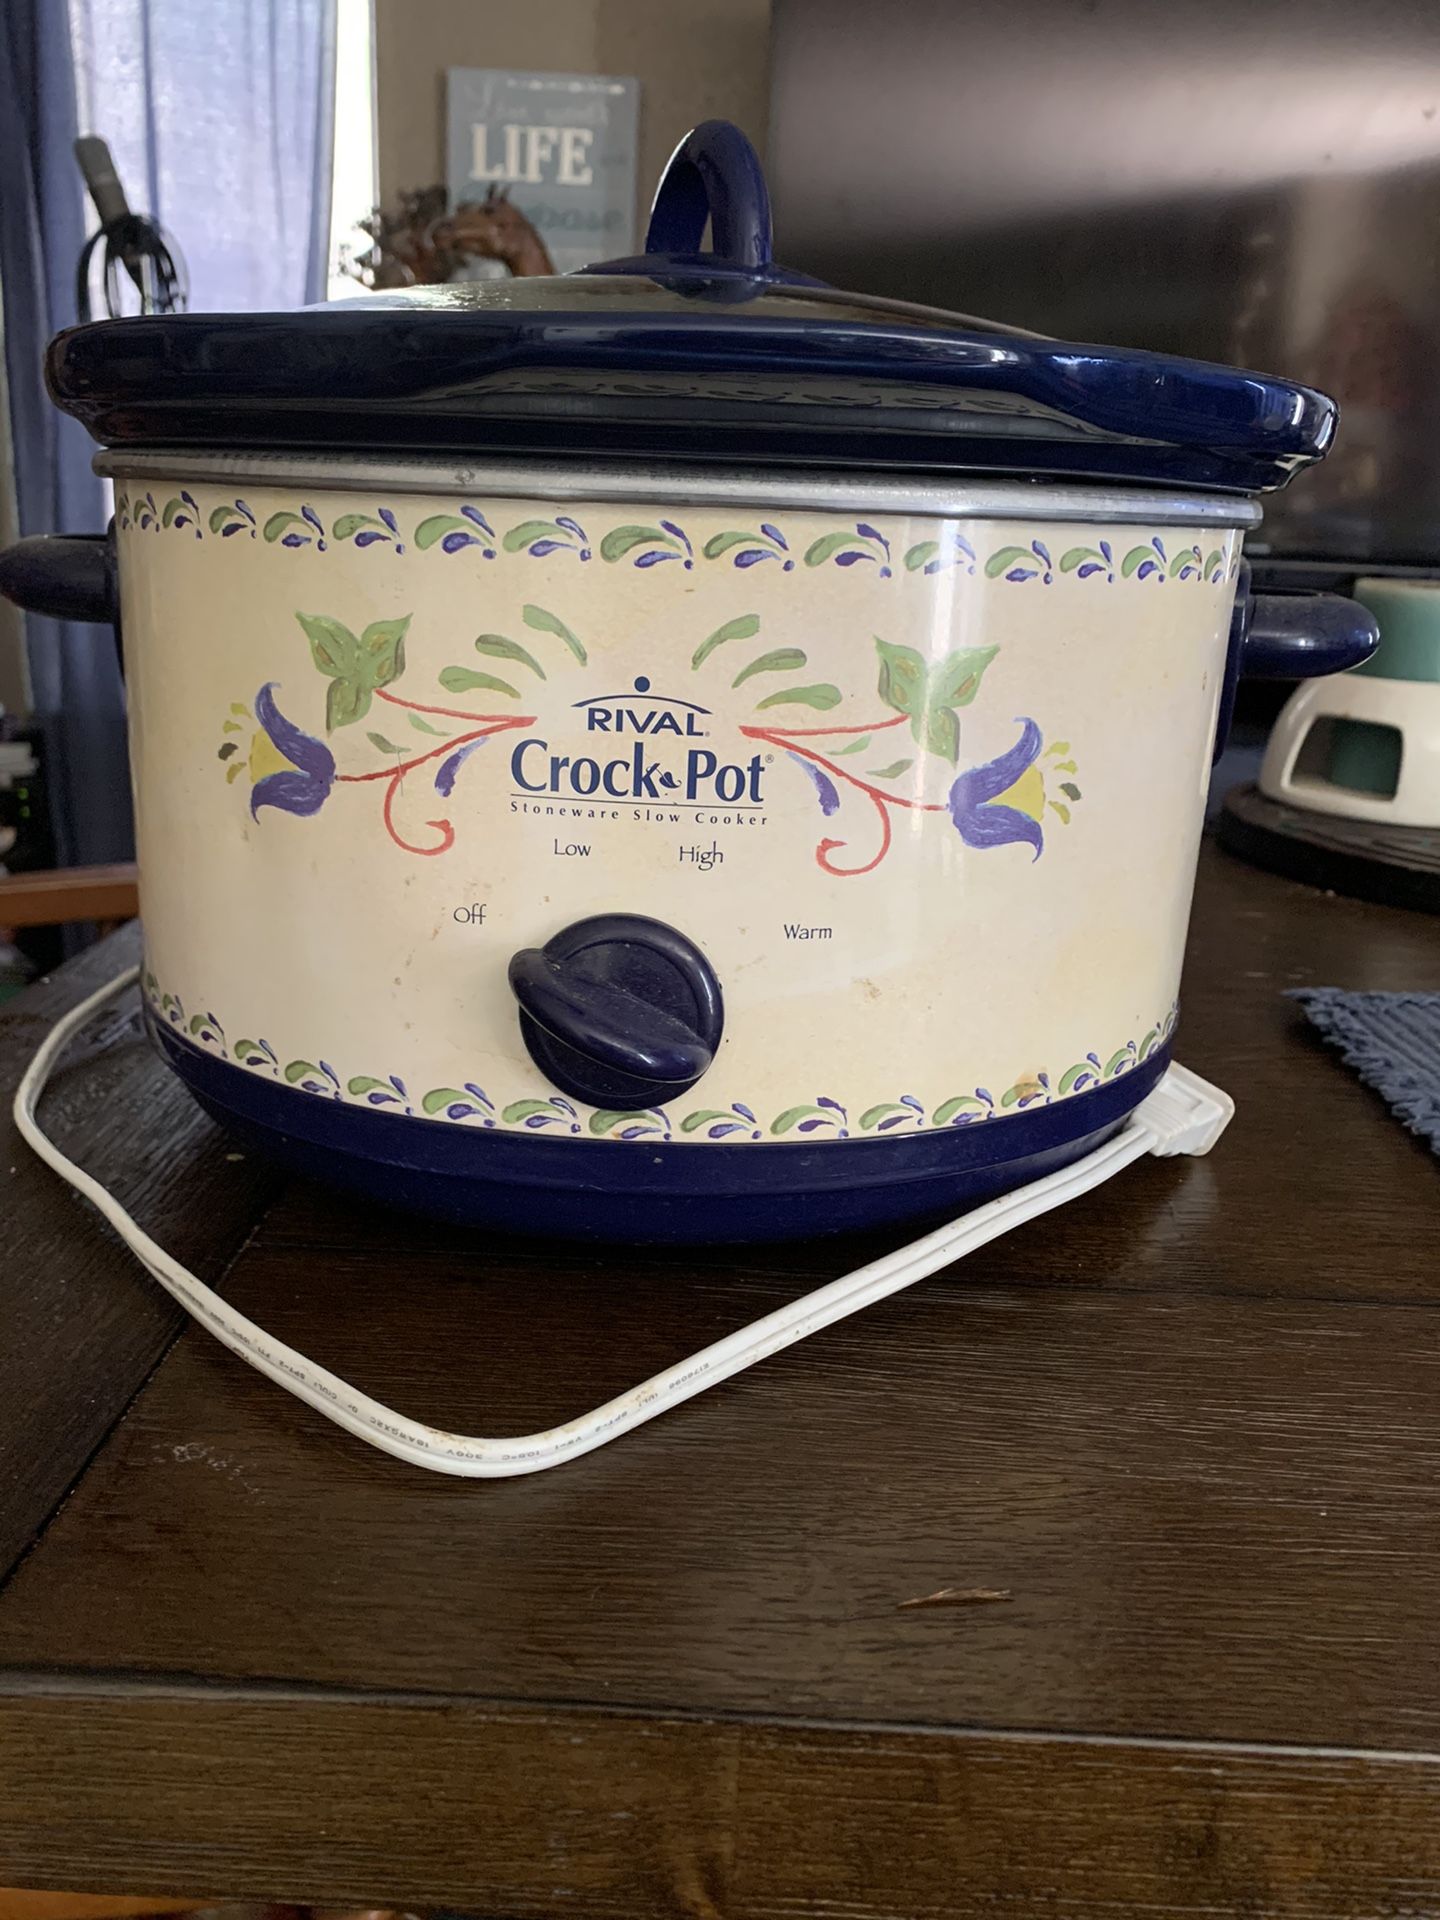 Crock Pot slow cooker. Like new